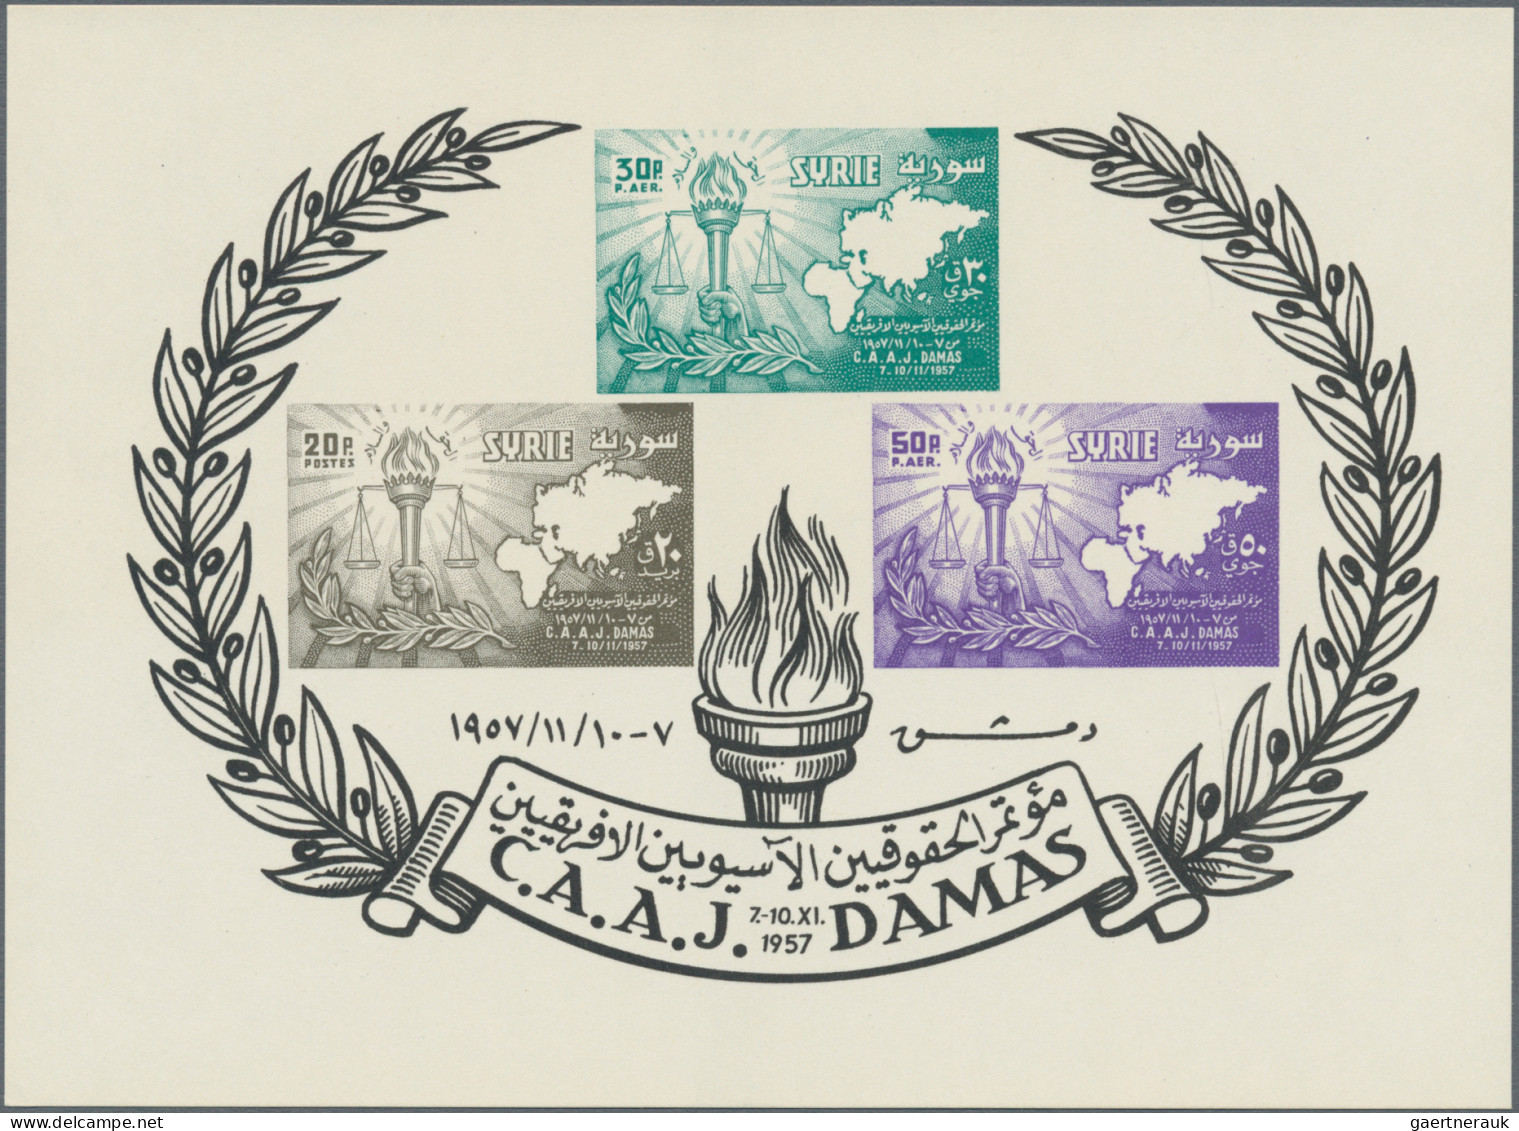 Syria: 1938/1957, a decent mint collection of 14 different souvenir sheets, MNH